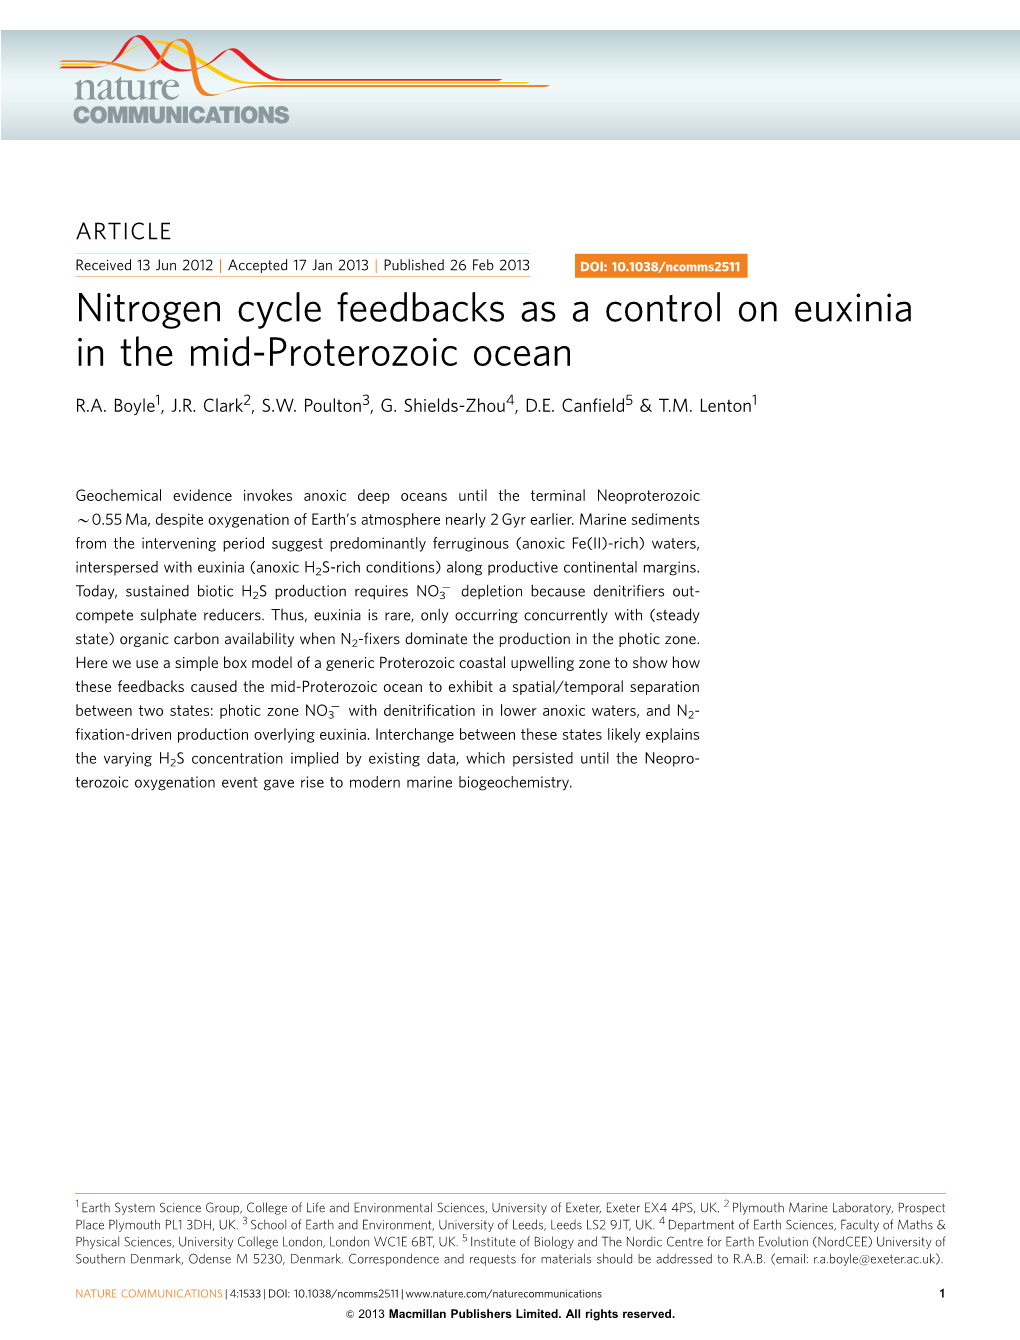 Nitrogen Cycle Feedbacks As a Control on Euxinia in the Mid-Proterozoic Ocean